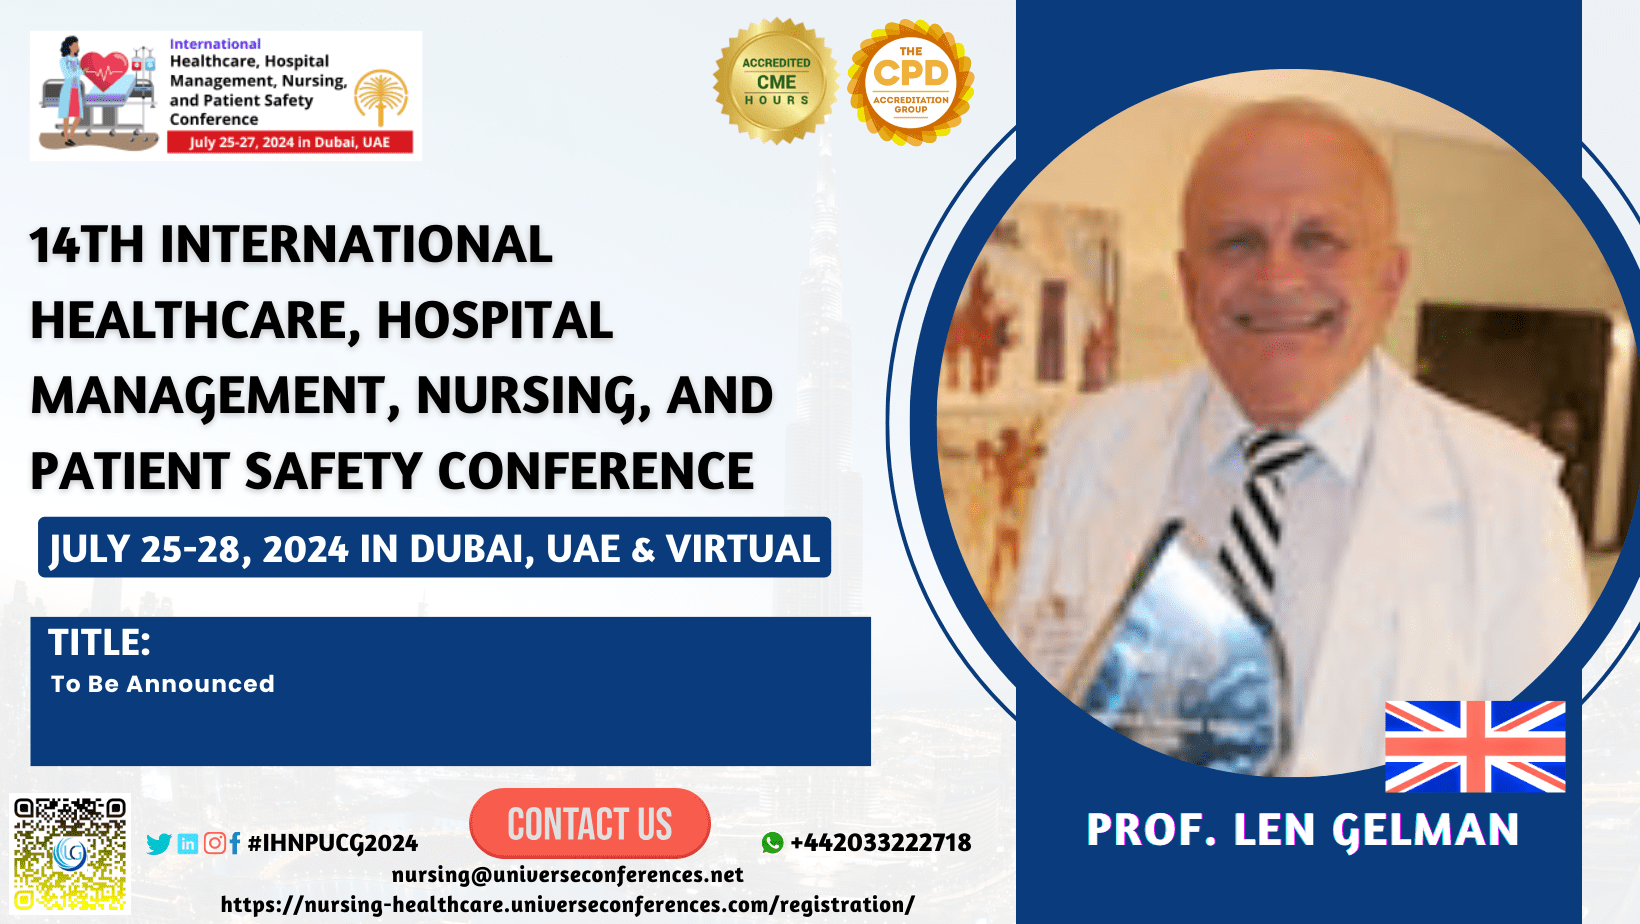 Prof. Len Gelman_14th International Healthcare, Hospital Management, Nursing, and Patient Safety Conference